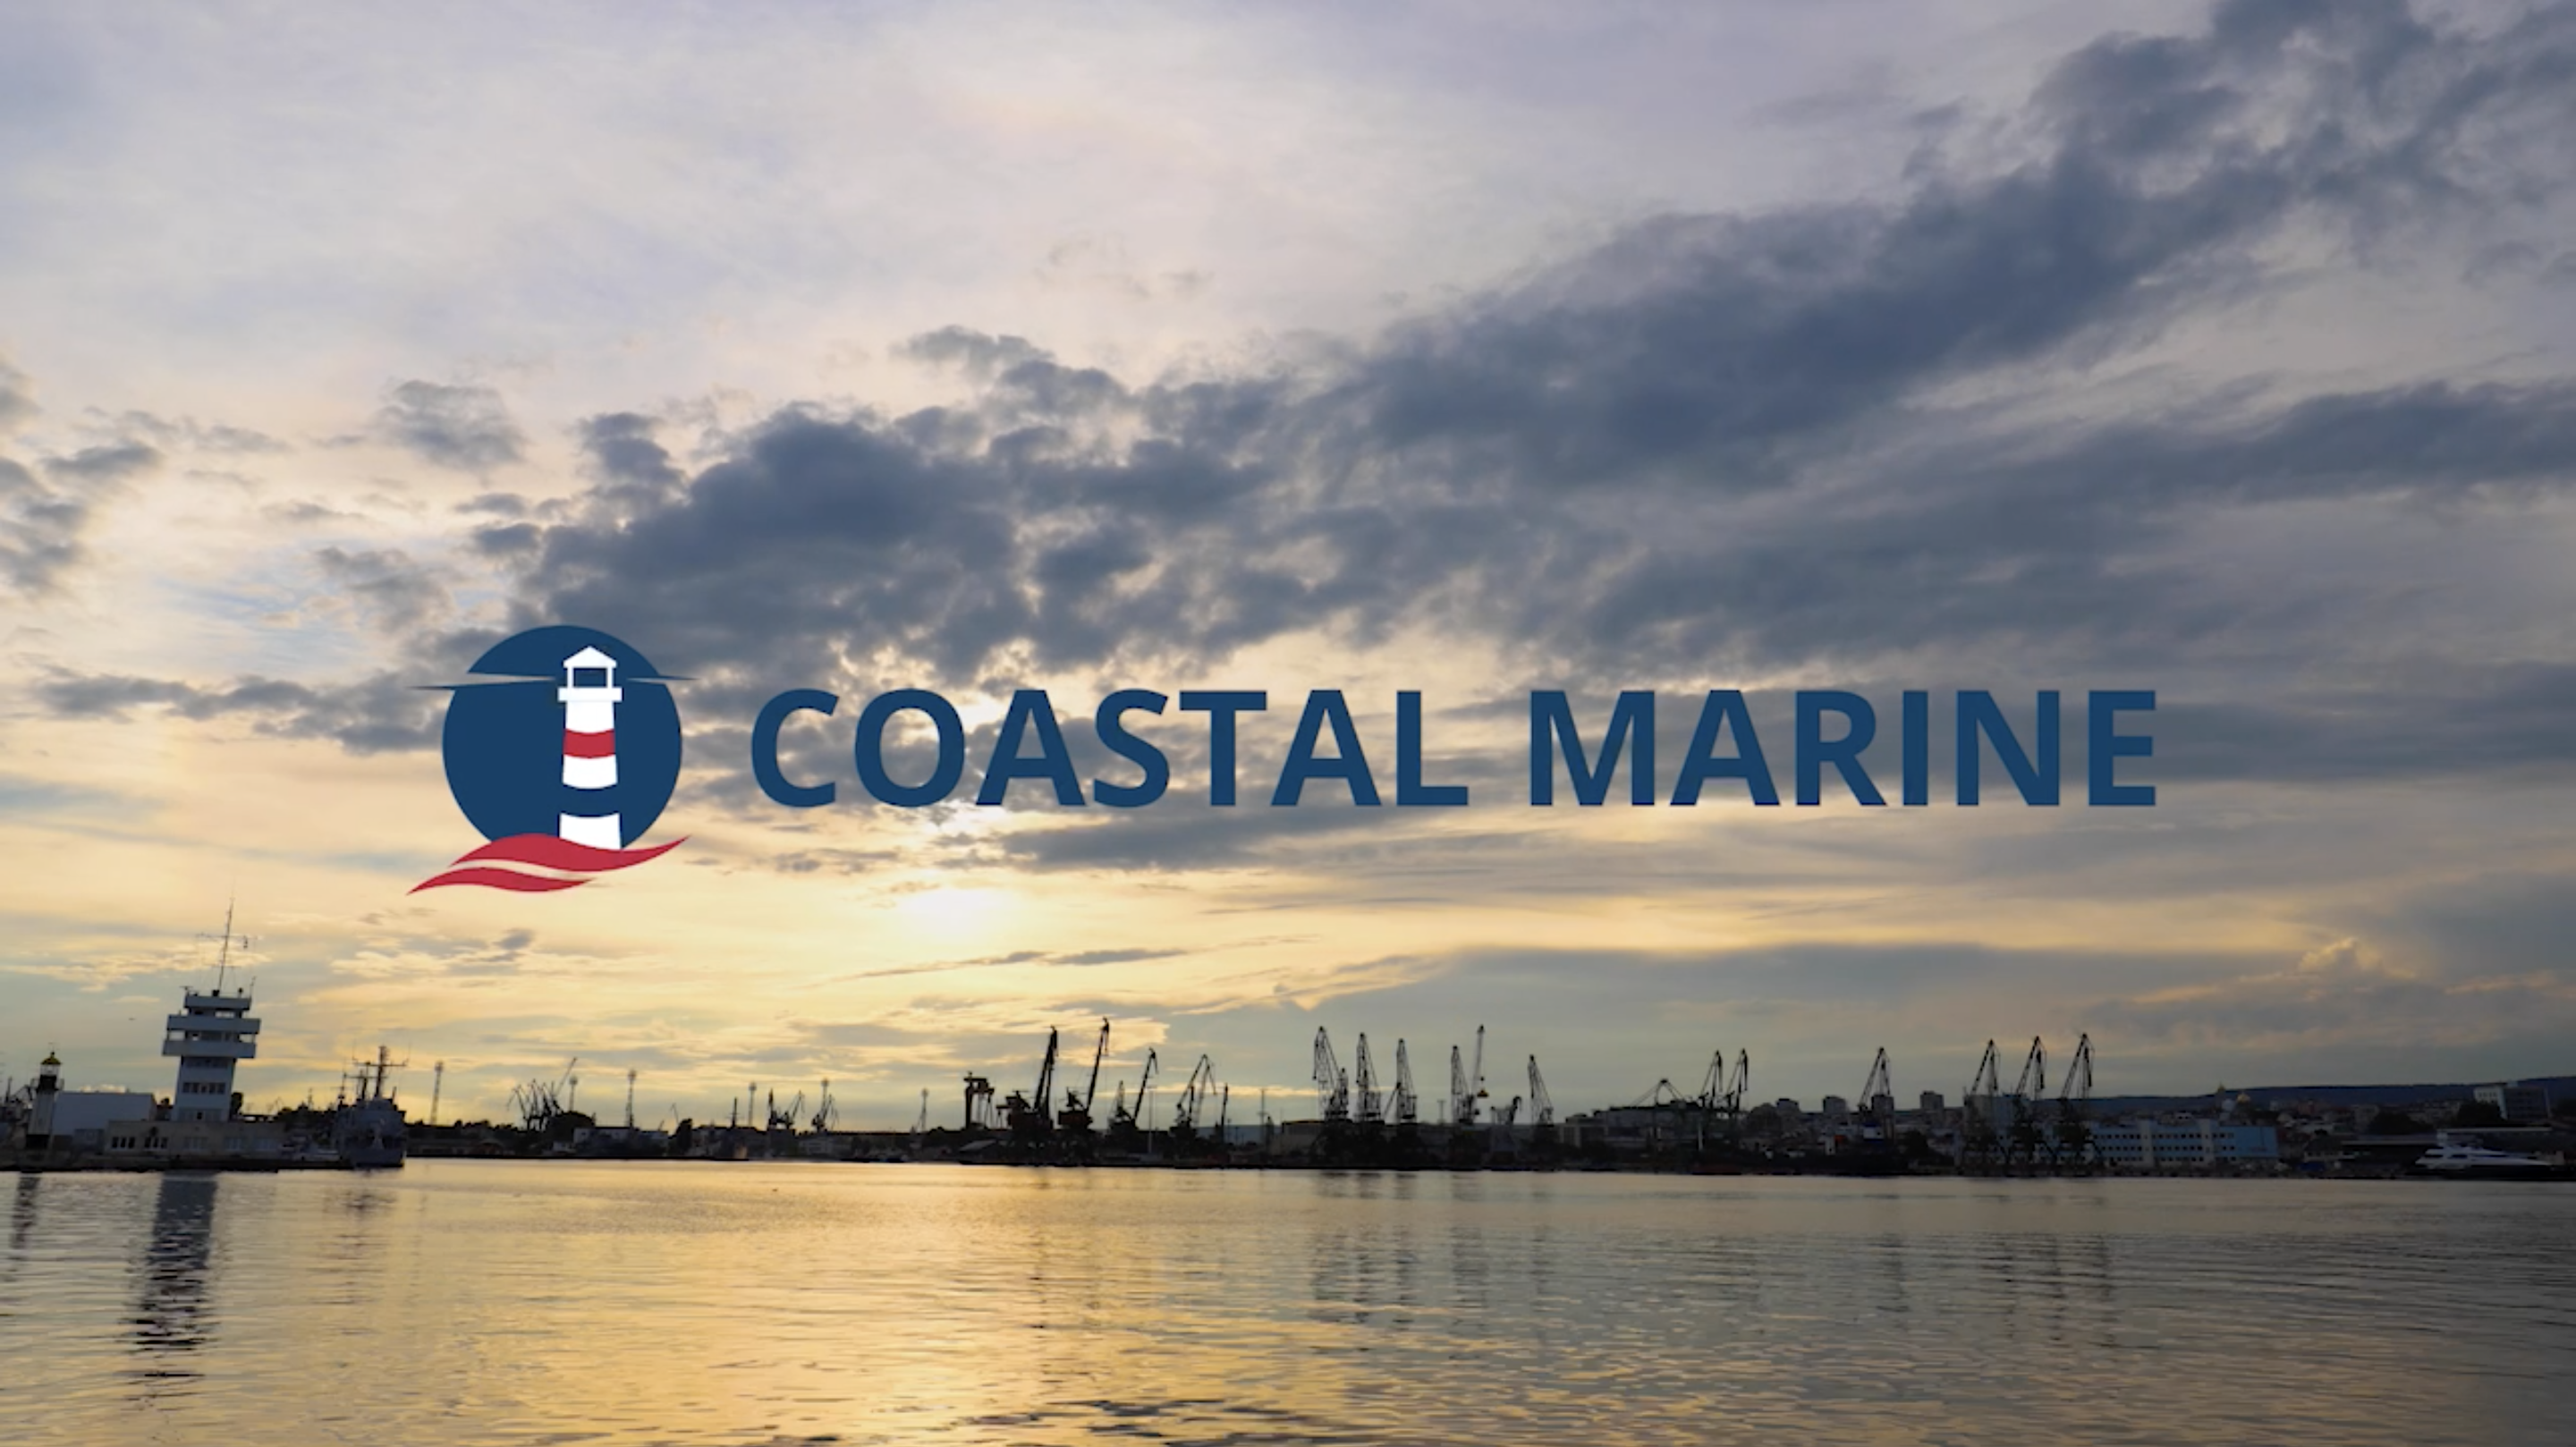 Coastal marine 10th anniversary video